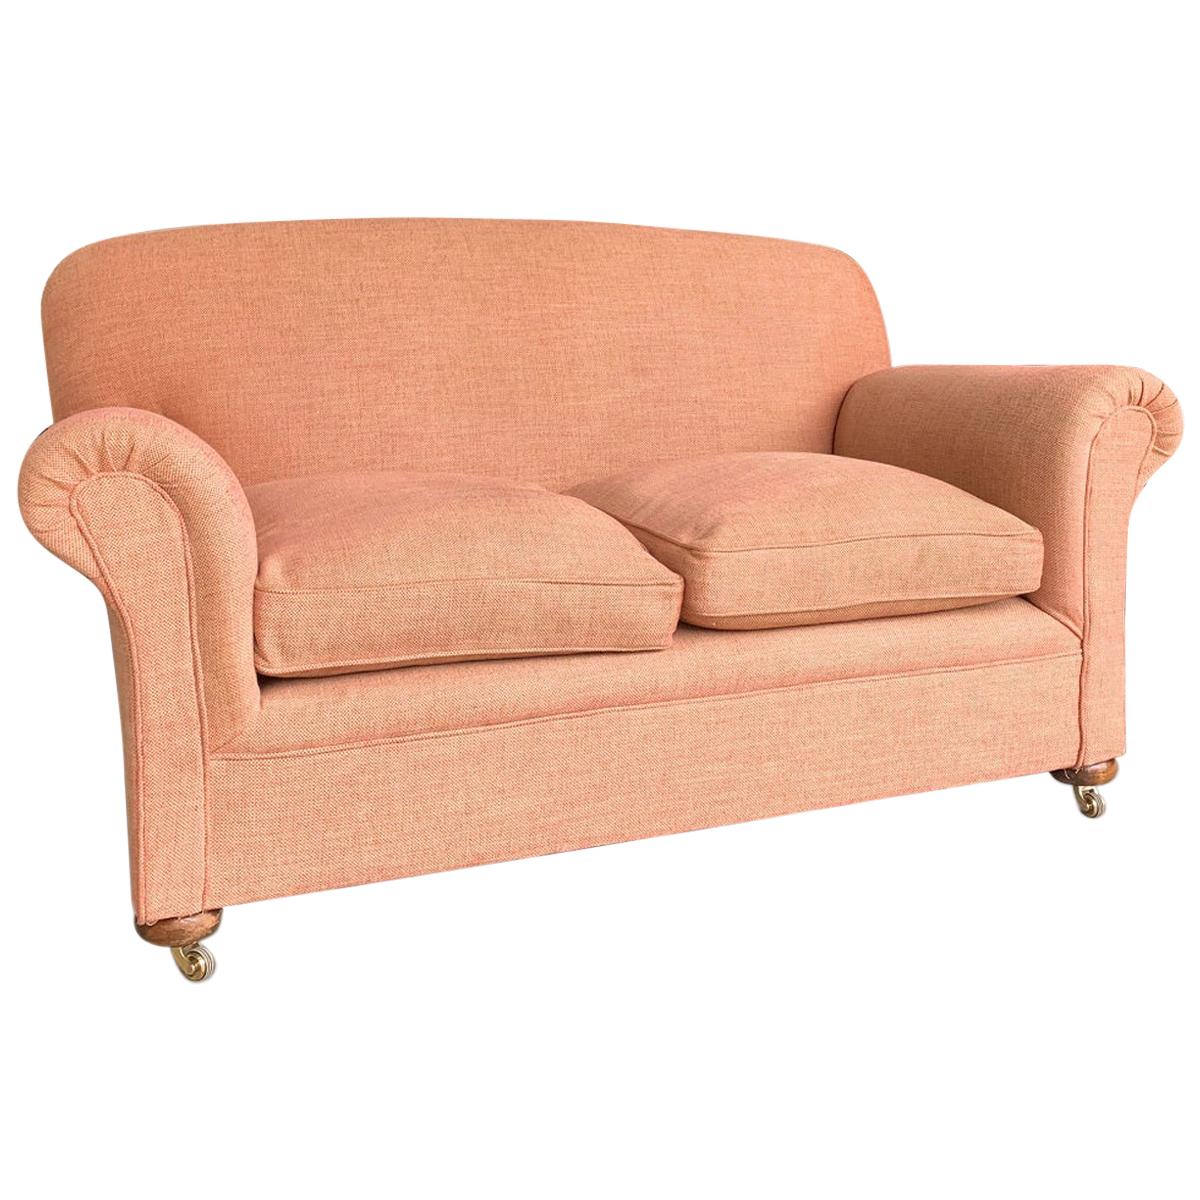 Early 20th Century Sofa Settee